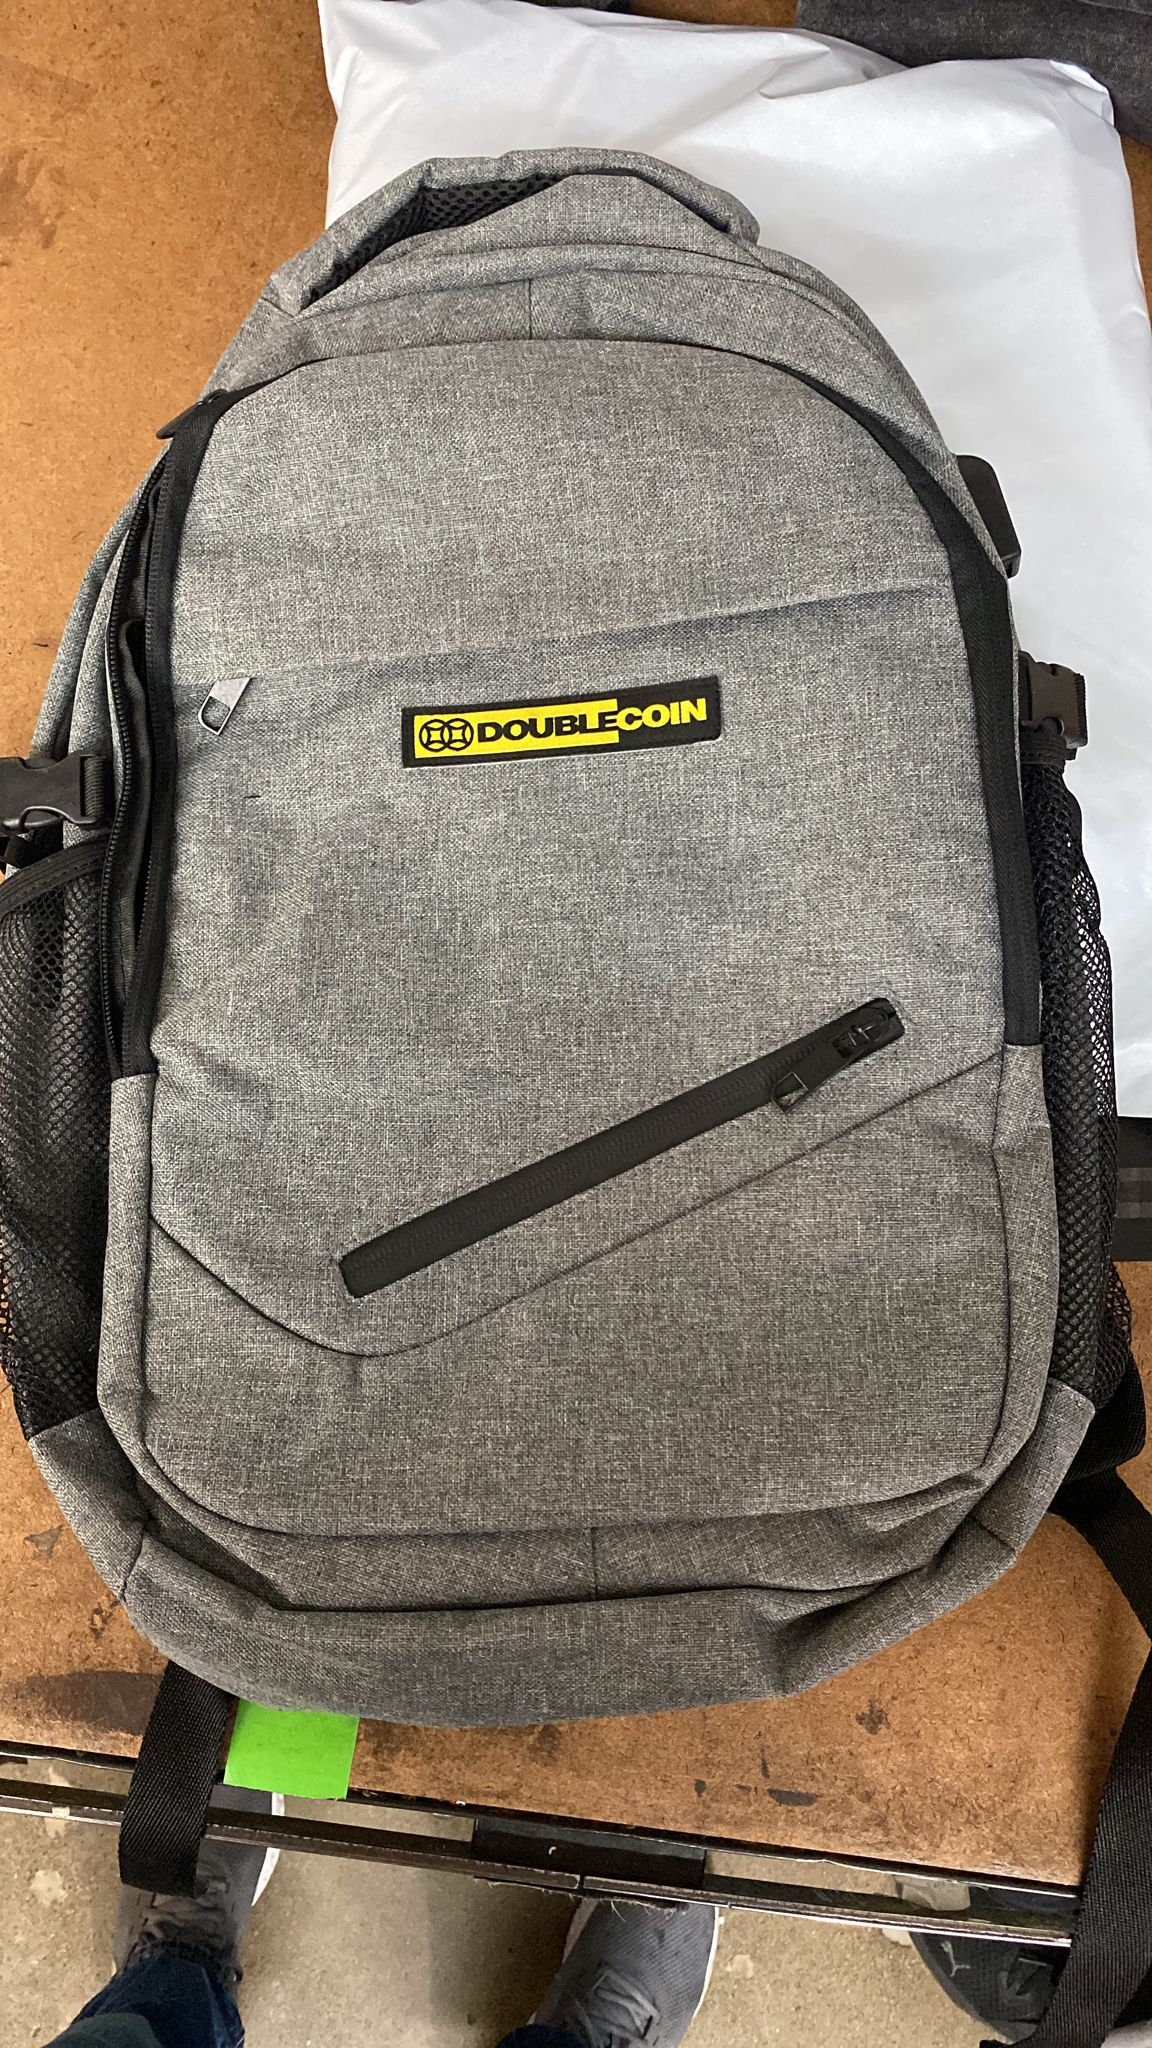 17″ Laptop Backpack in Melange Dark Gray with logo